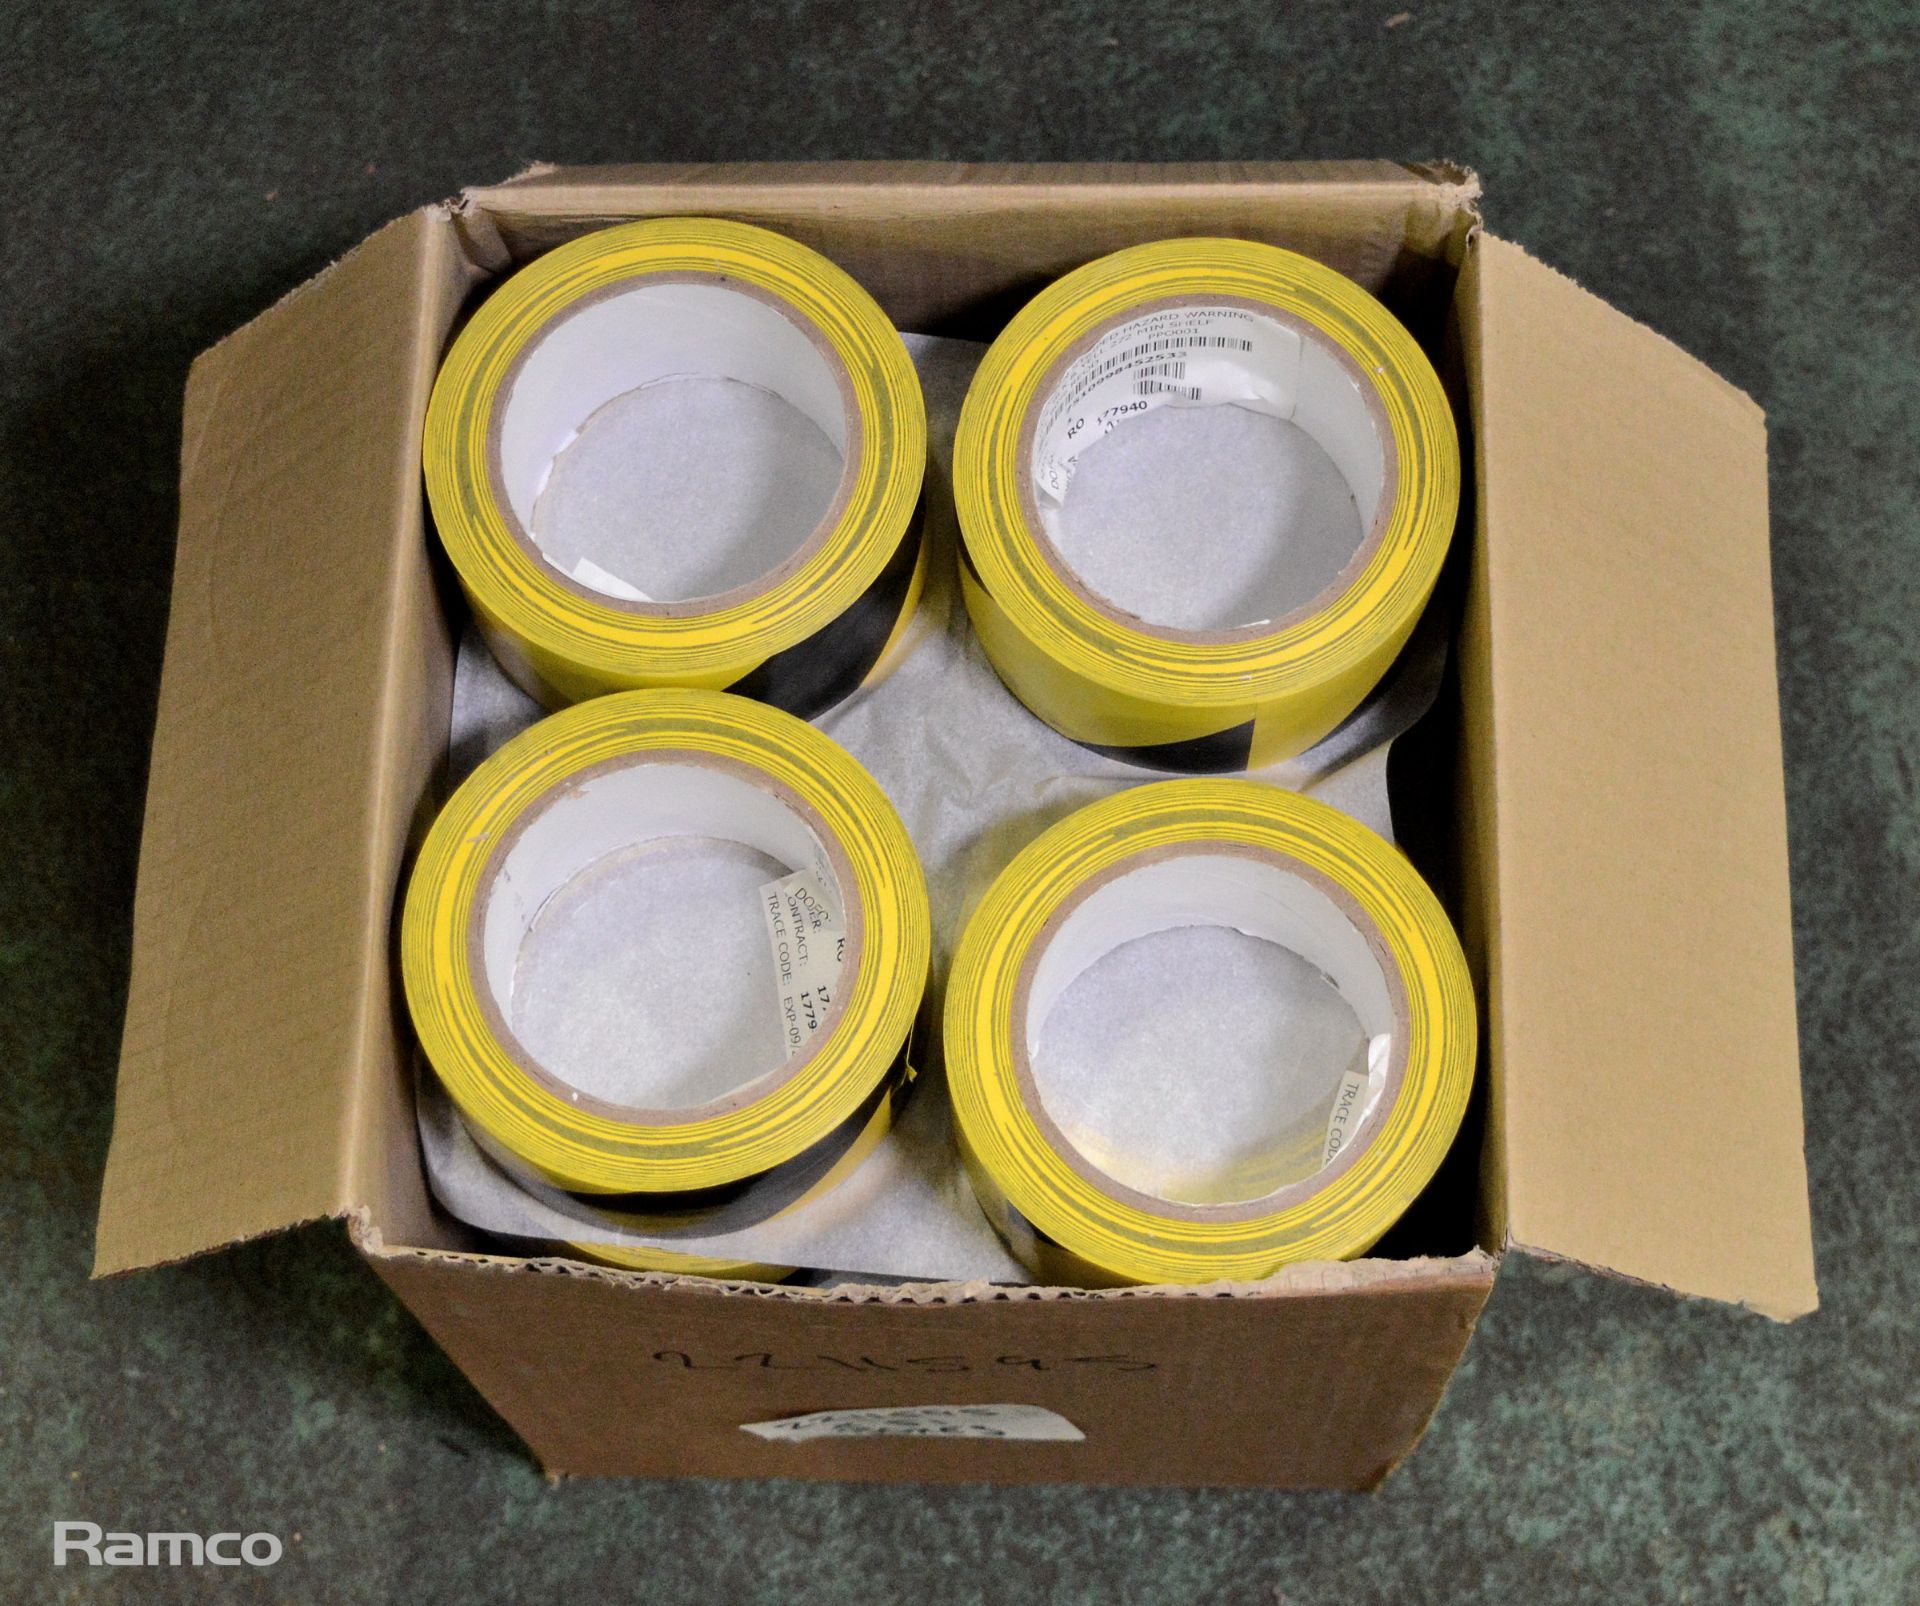 Anixter Black & Yellow Flagging Tape 50mm x 30m - 6 Rolls Per Box - 6 boxes - Image 4 of 4